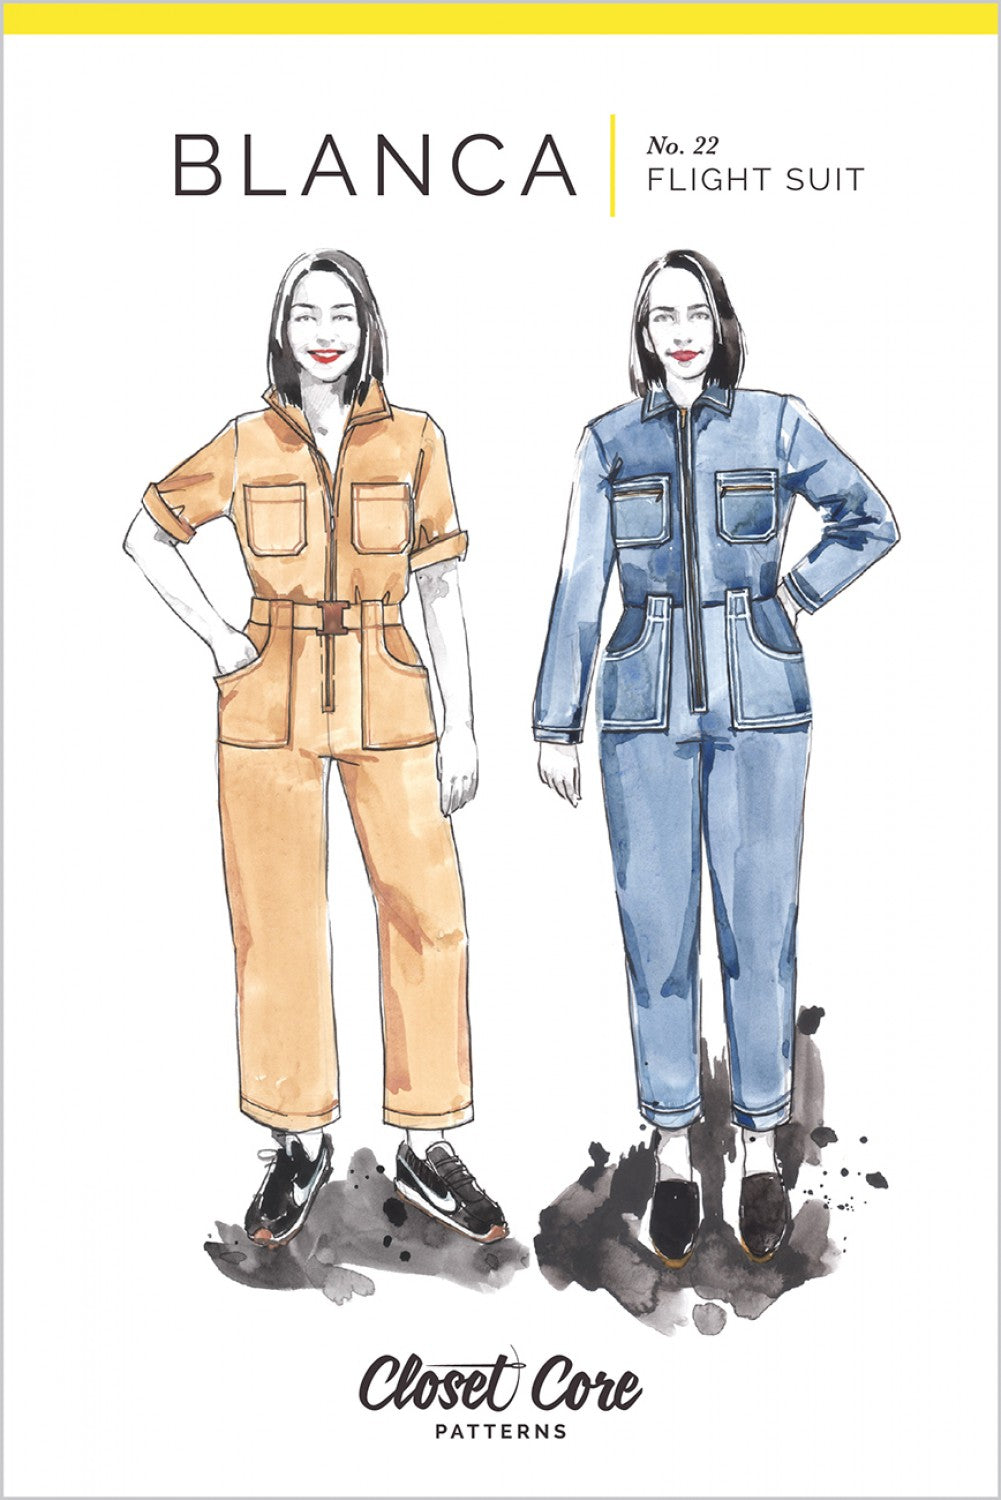 Blanca Flight Suit by Closet Core Patterns — The Social Fabric